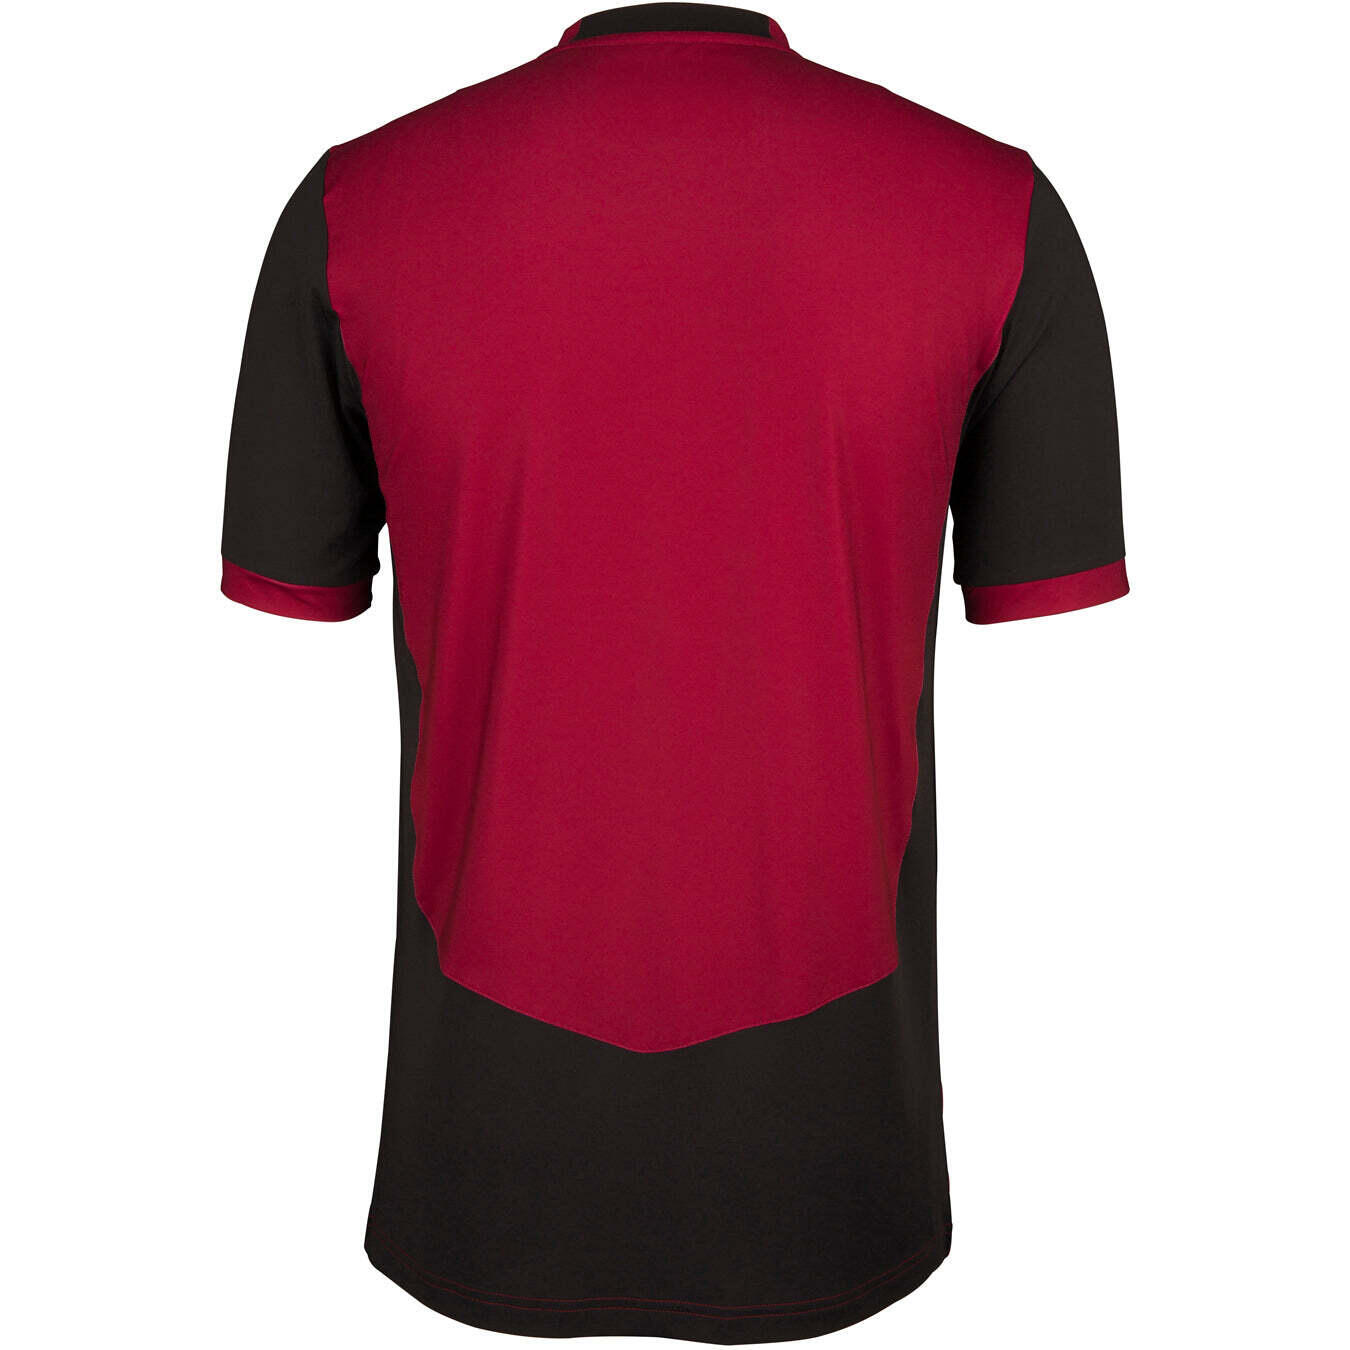 Pro Performance T20 Short Sleeve Shirt, Maroon / Black, Junior 2/3